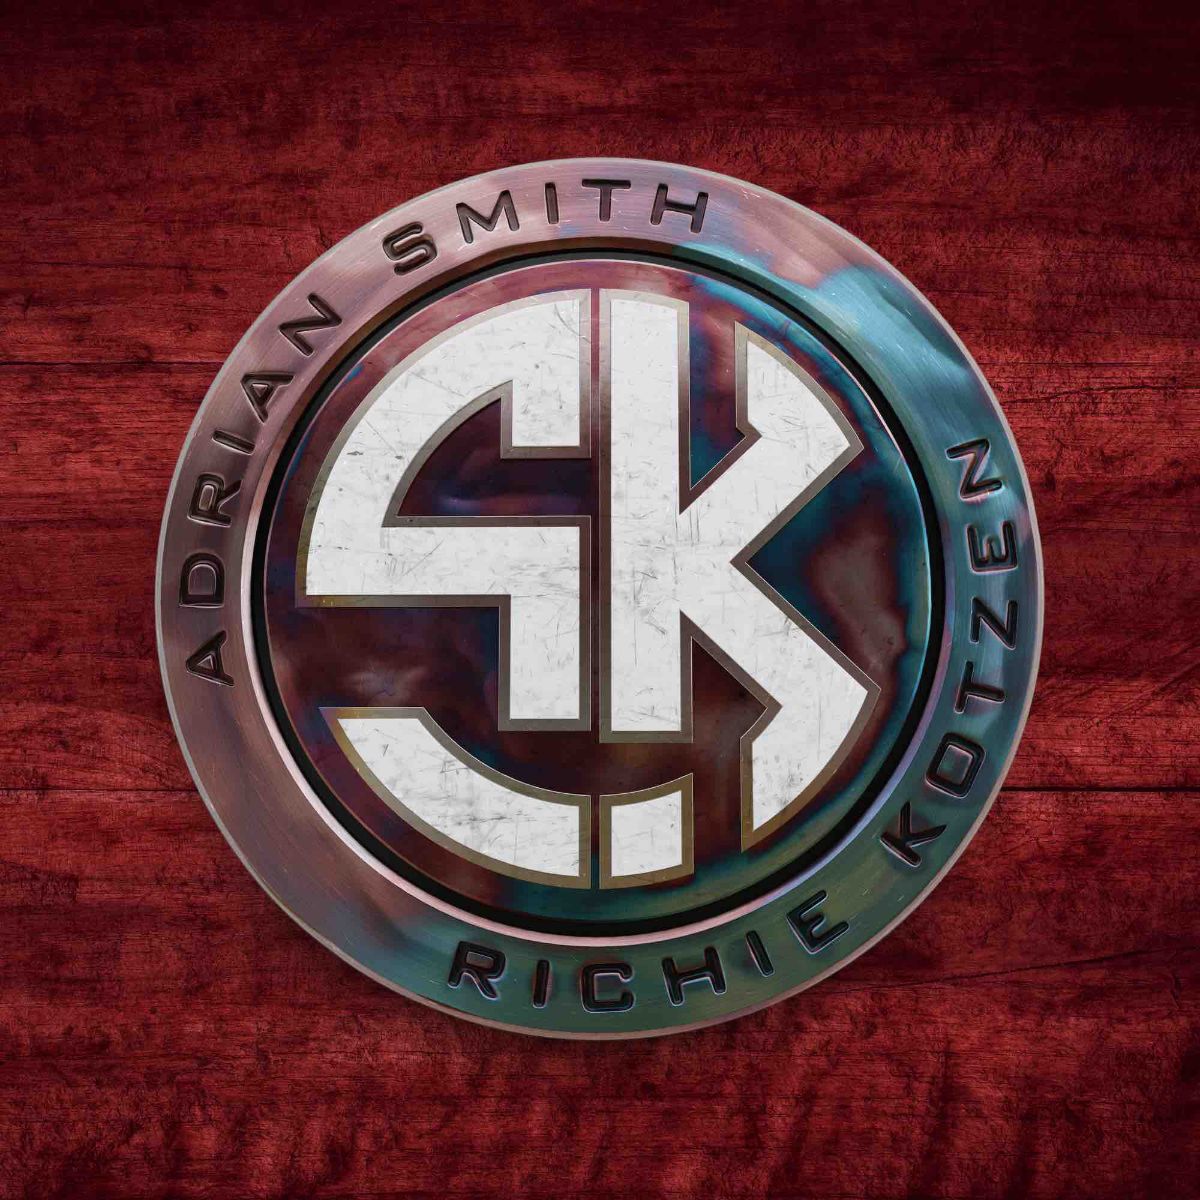 Smith / Kotzen share third single 'Running'